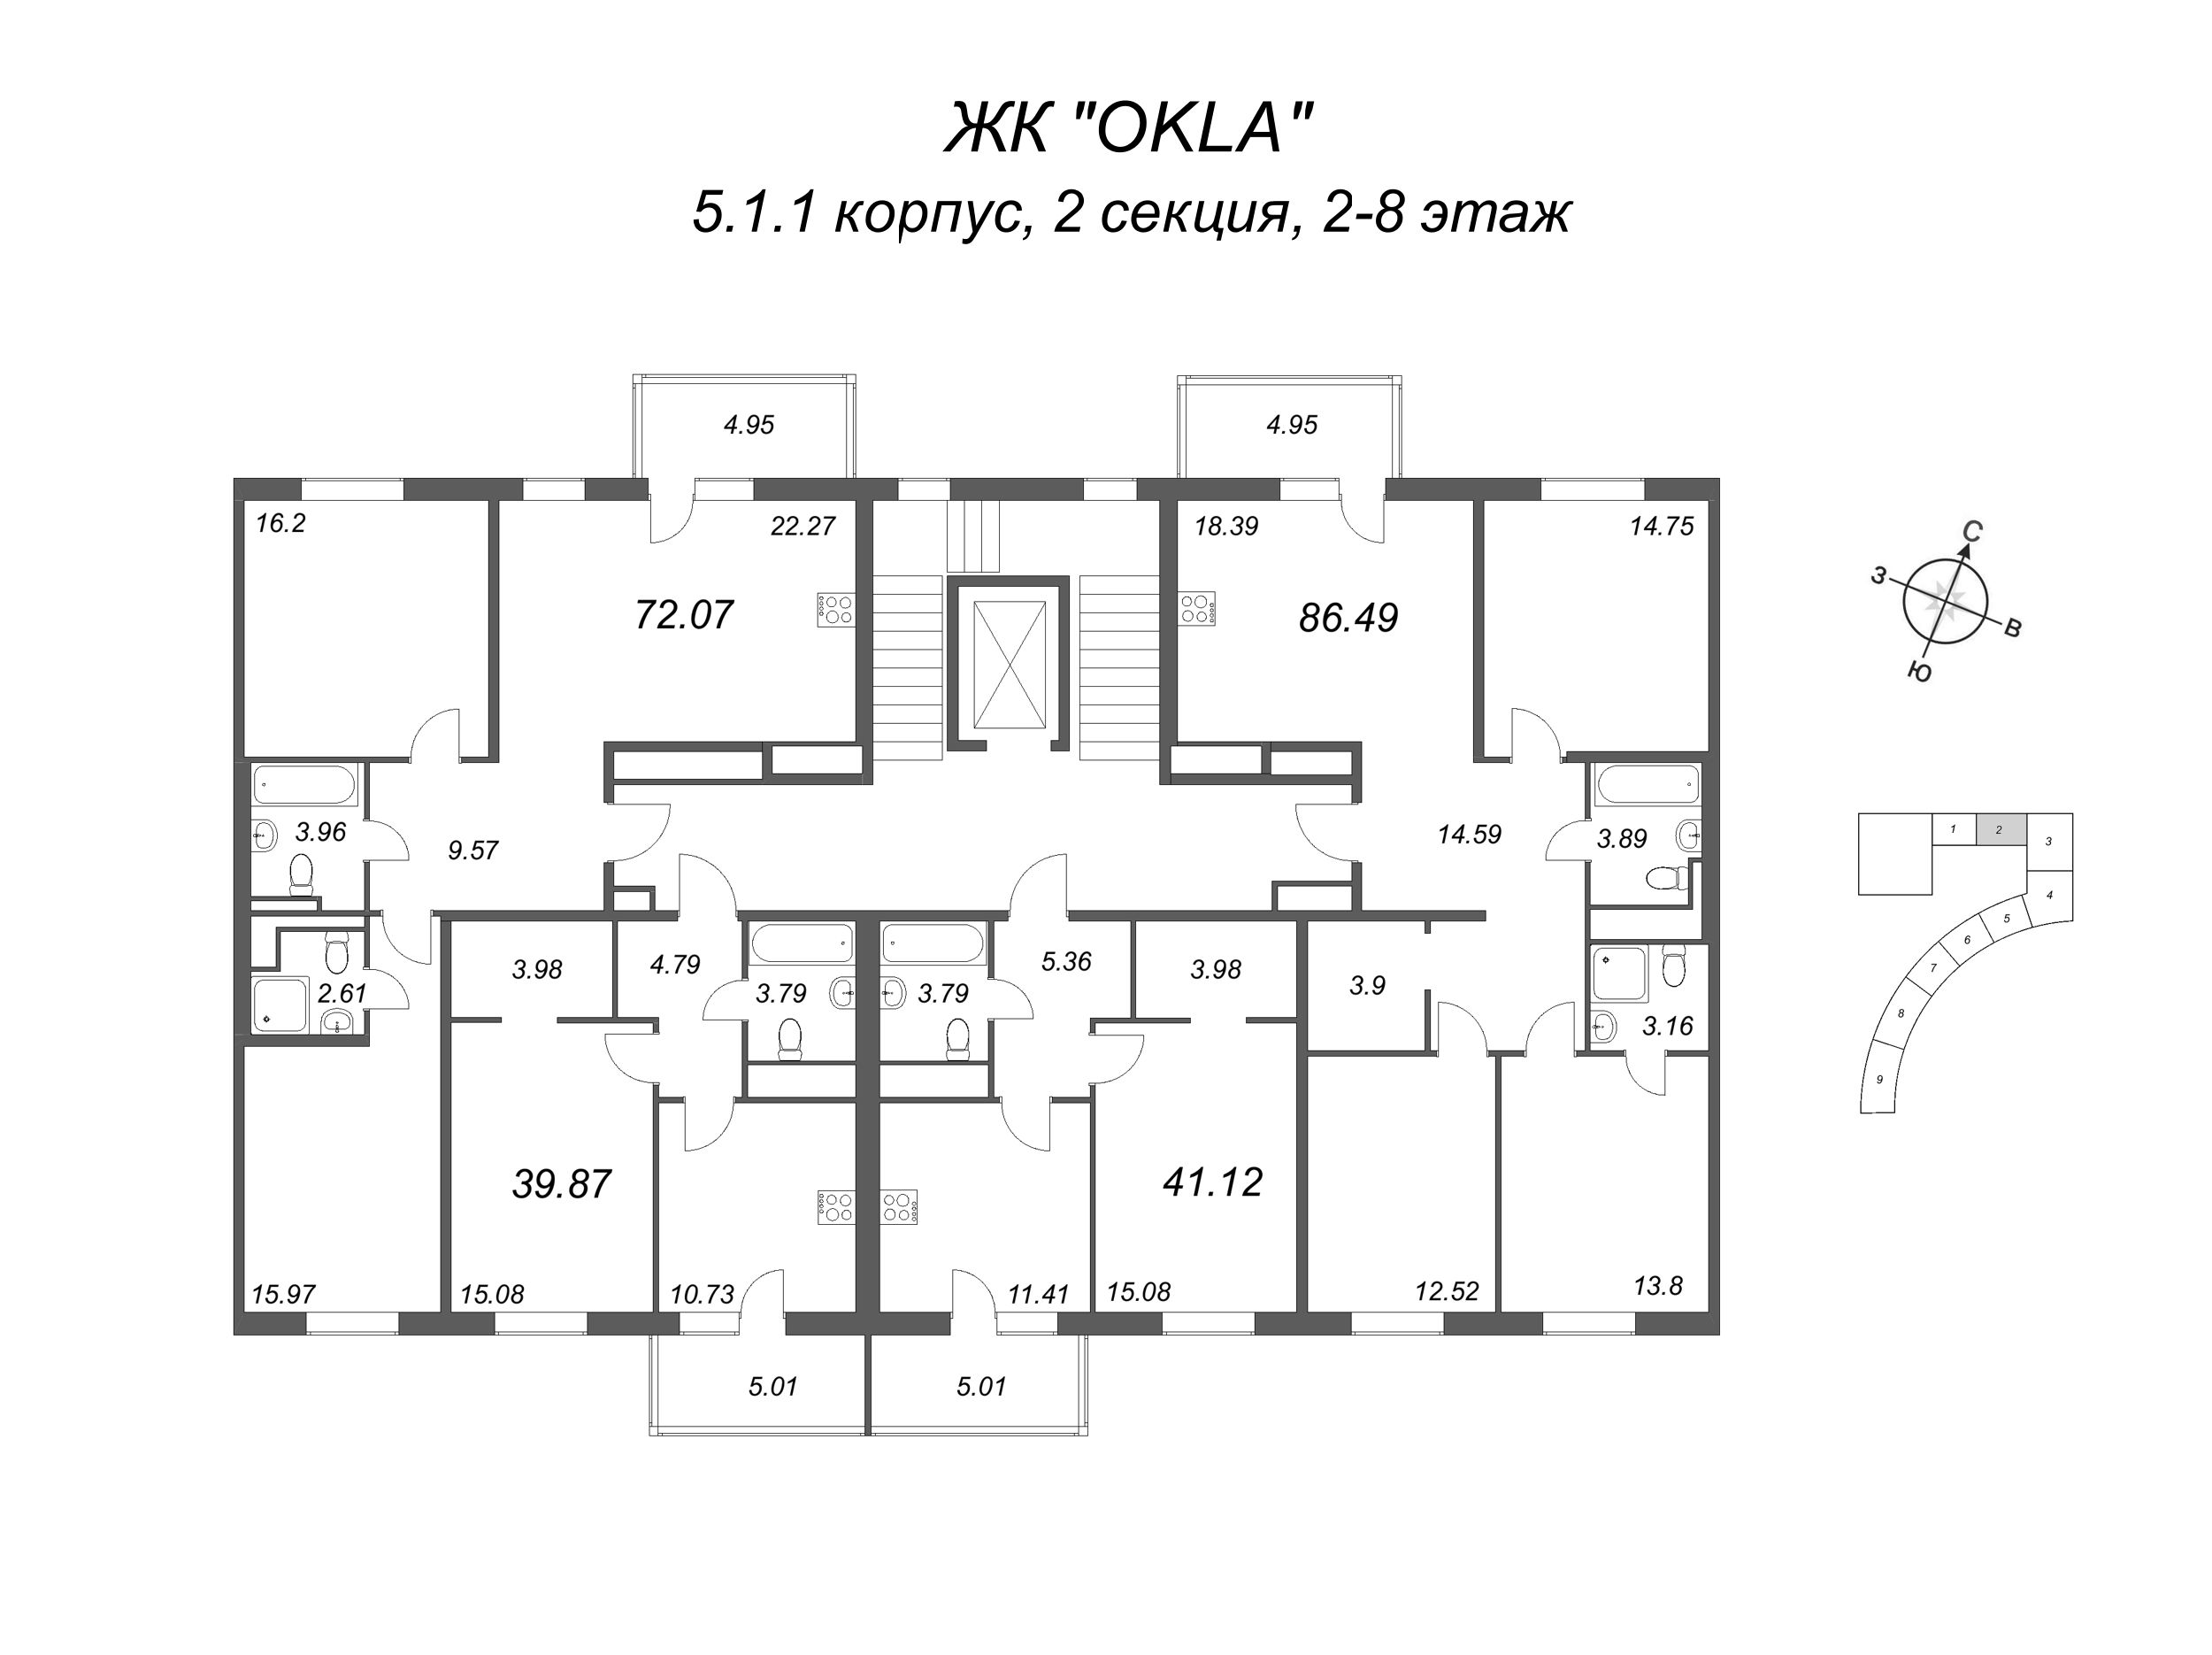 4-комнатная (Евро) квартира, 89.97 м² - планировка этажа